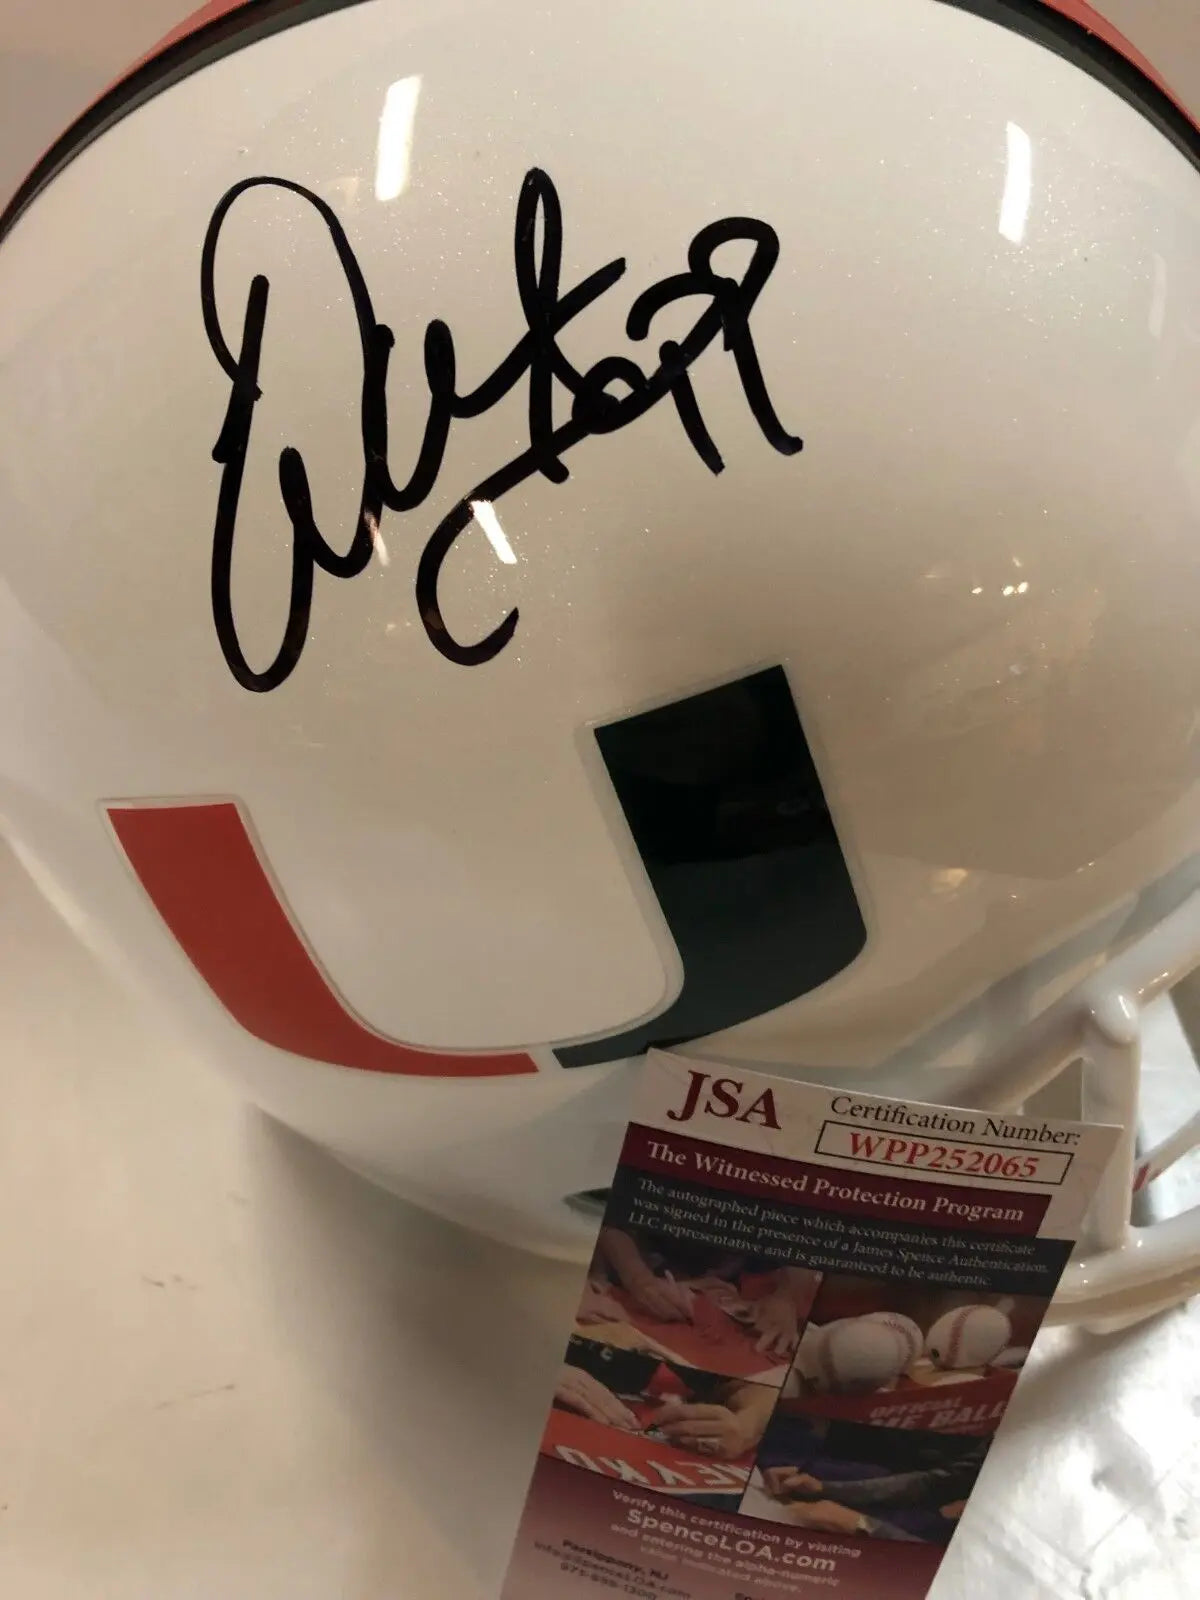 MVP Authentics Warren Sapp Autographed Signed Miami Hurricanes Full Size Helmet Jsa Coa 270 sports jersey framing , jersey framing